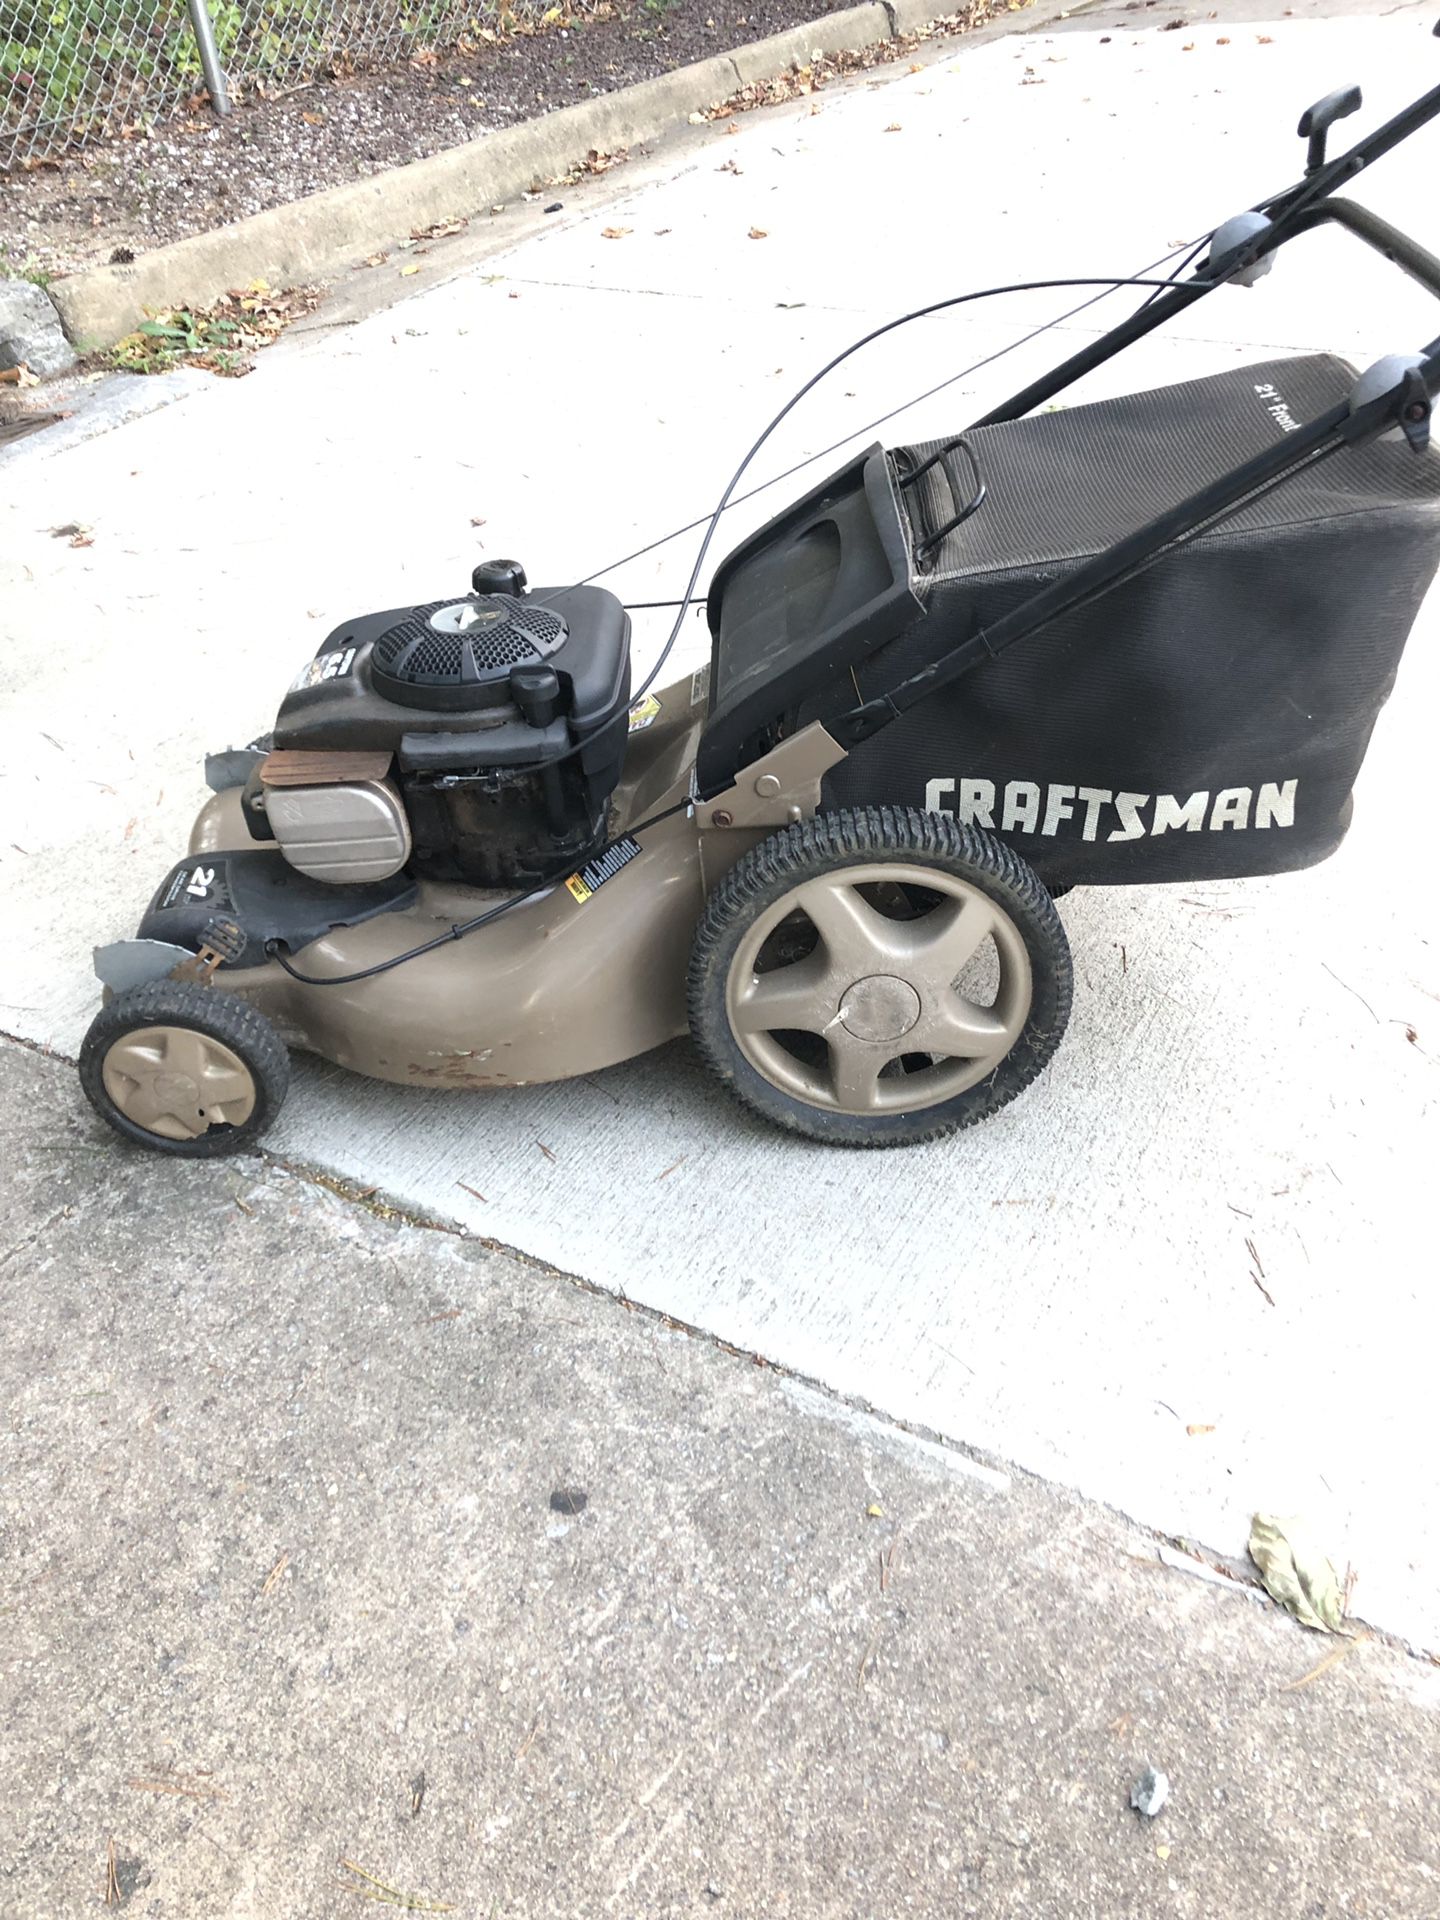 Craftsman self propelled mower with bag.